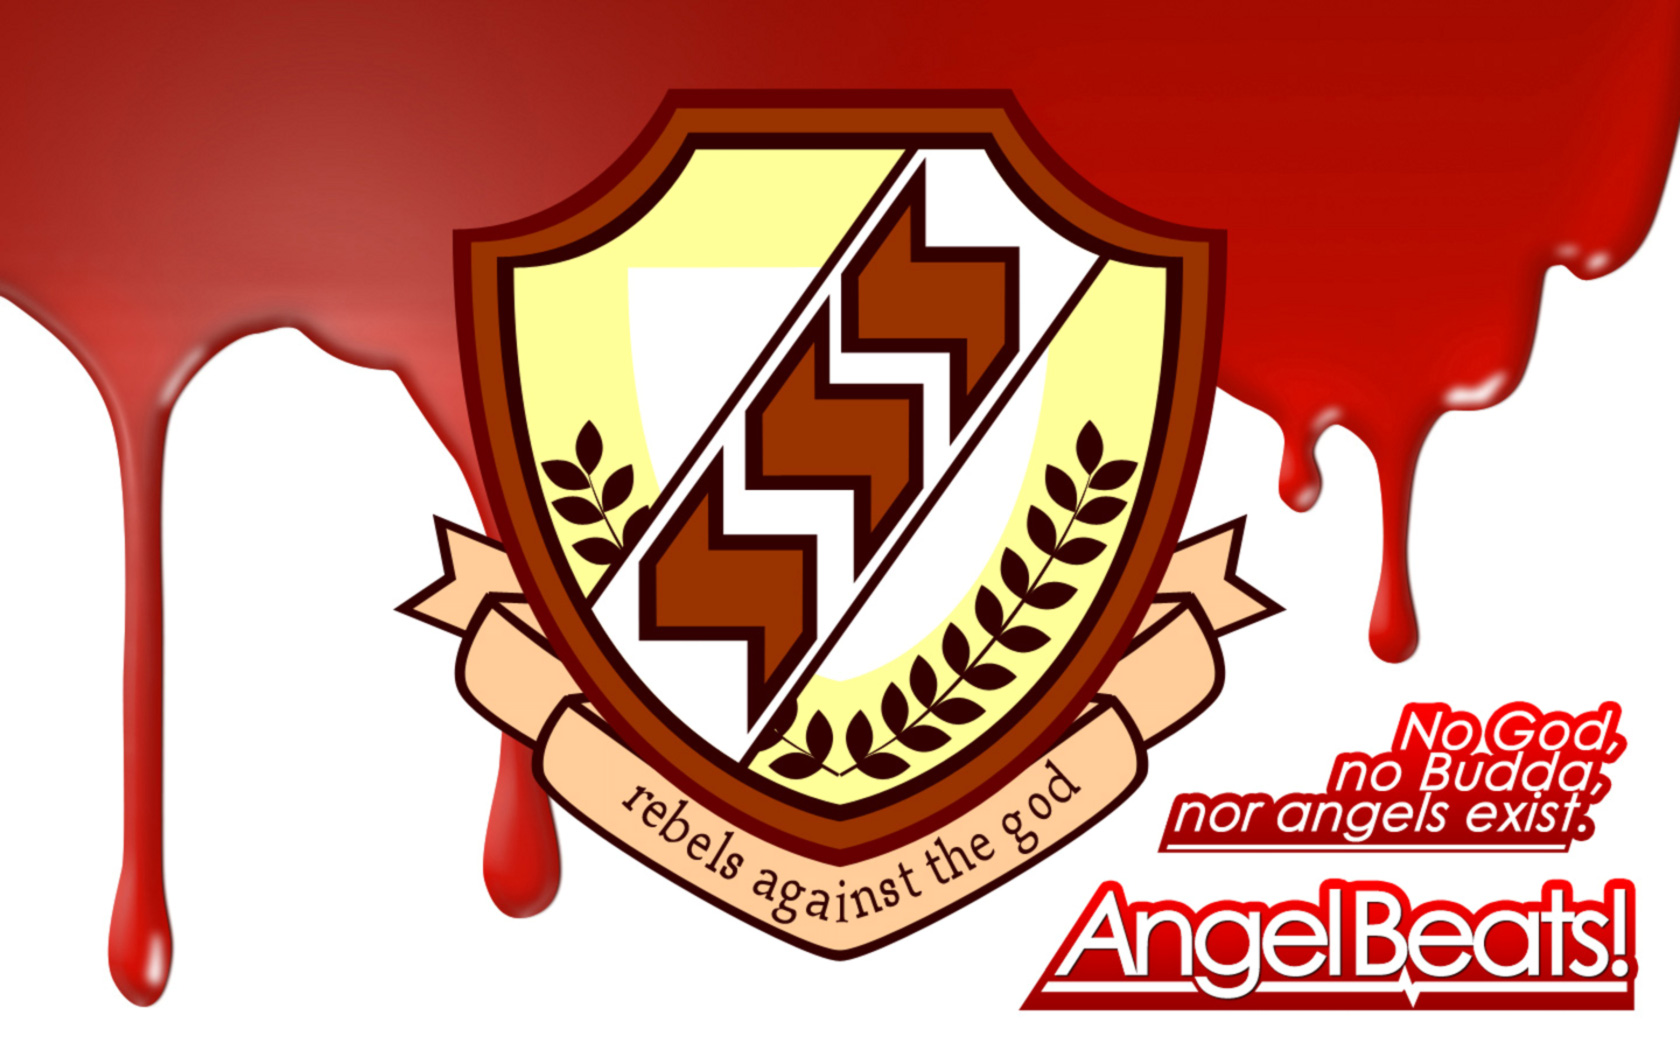 Exist again. Angel Beats logo. Angel Beats logo animated.